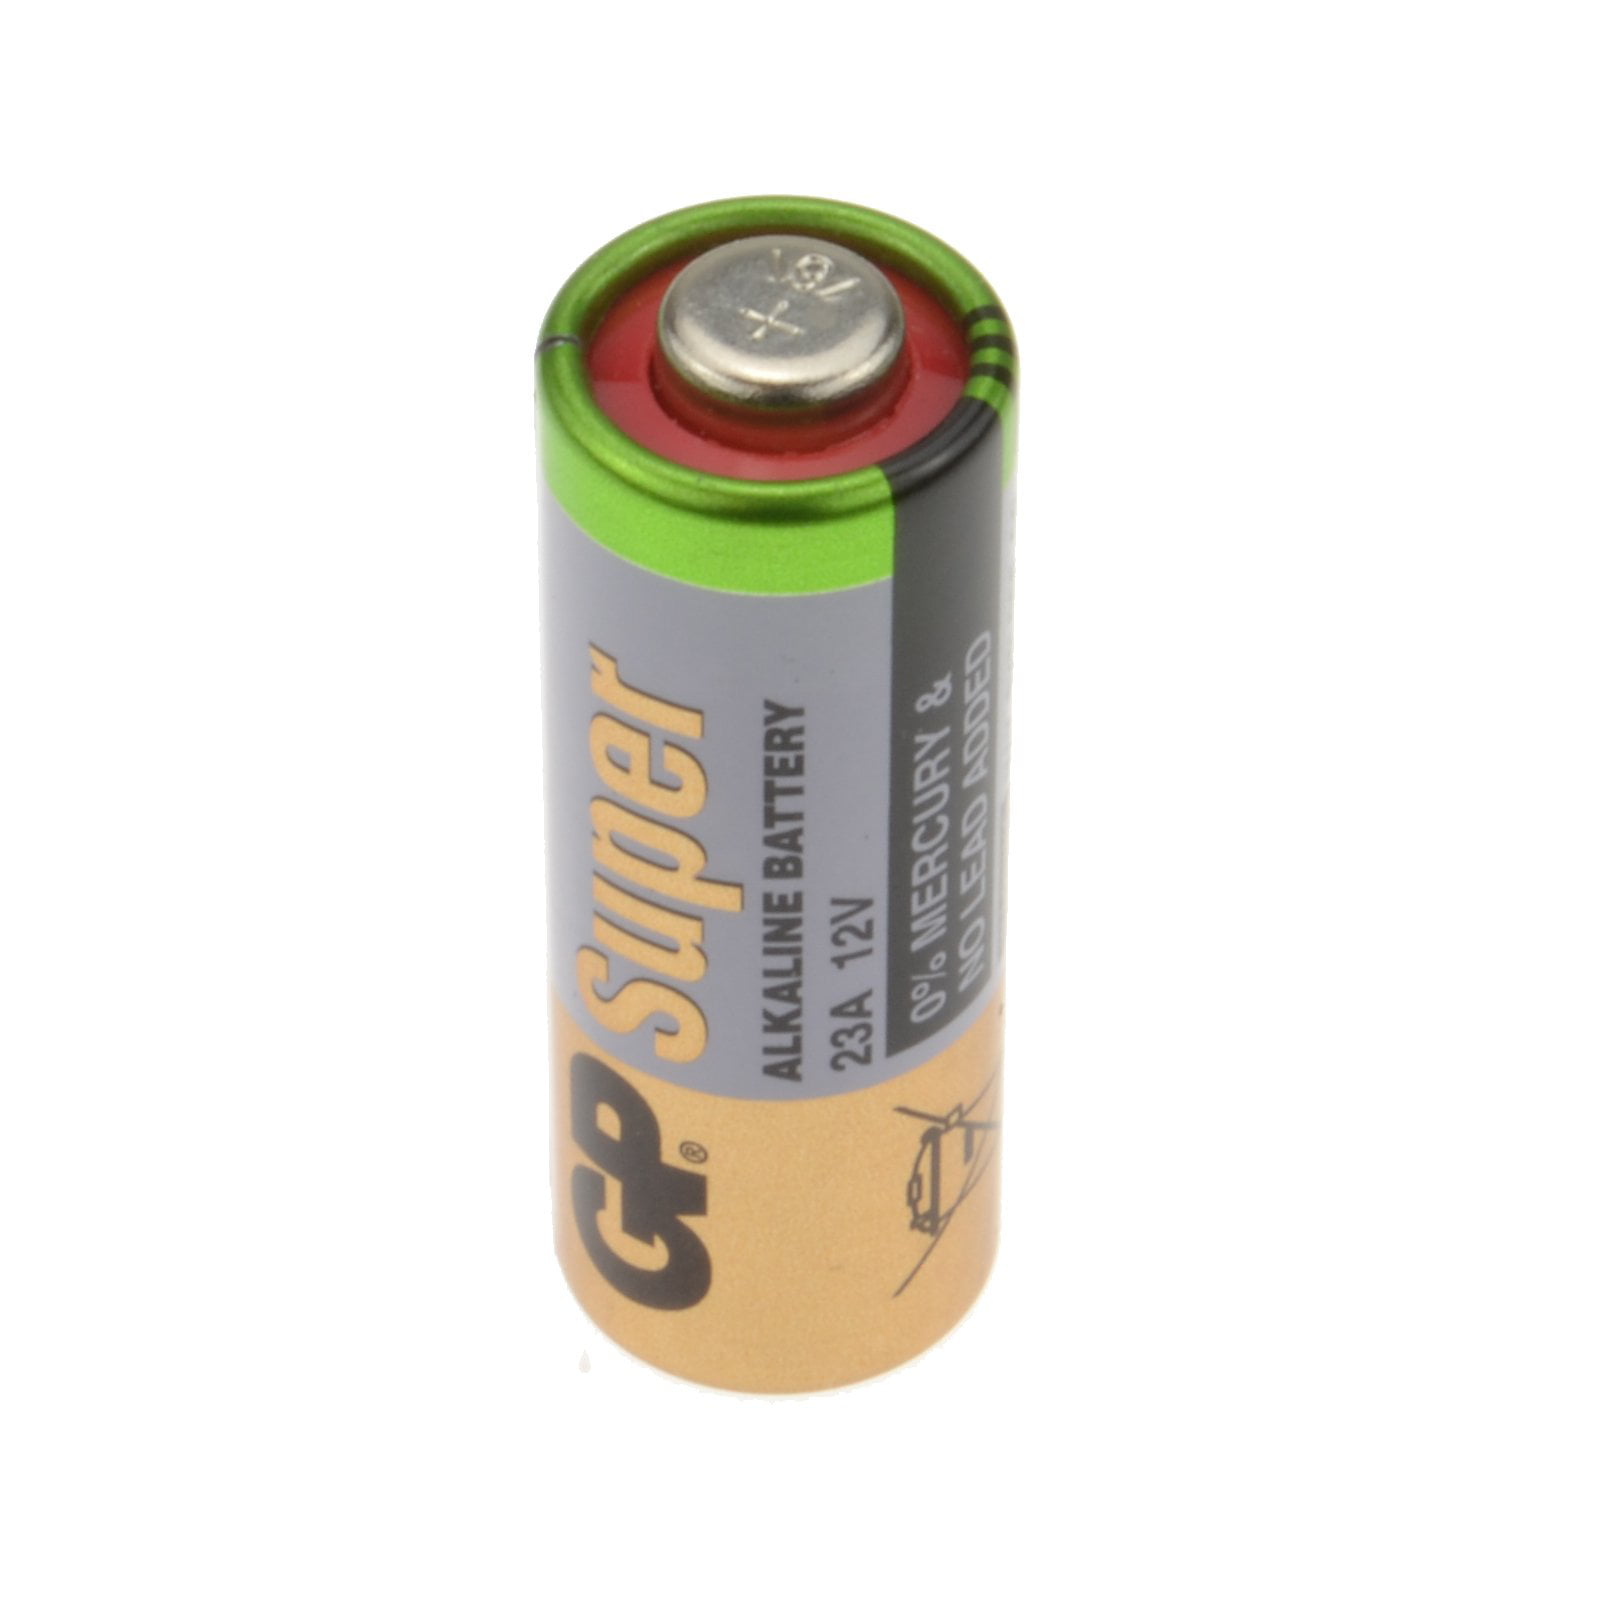 Gp alkaline battery. Vr22 батарейка. Батарейки 12 вольт размер 23 AE. Тест батареек 23a. Батарейки 12 вольт Размеры 23a и 23 AE.